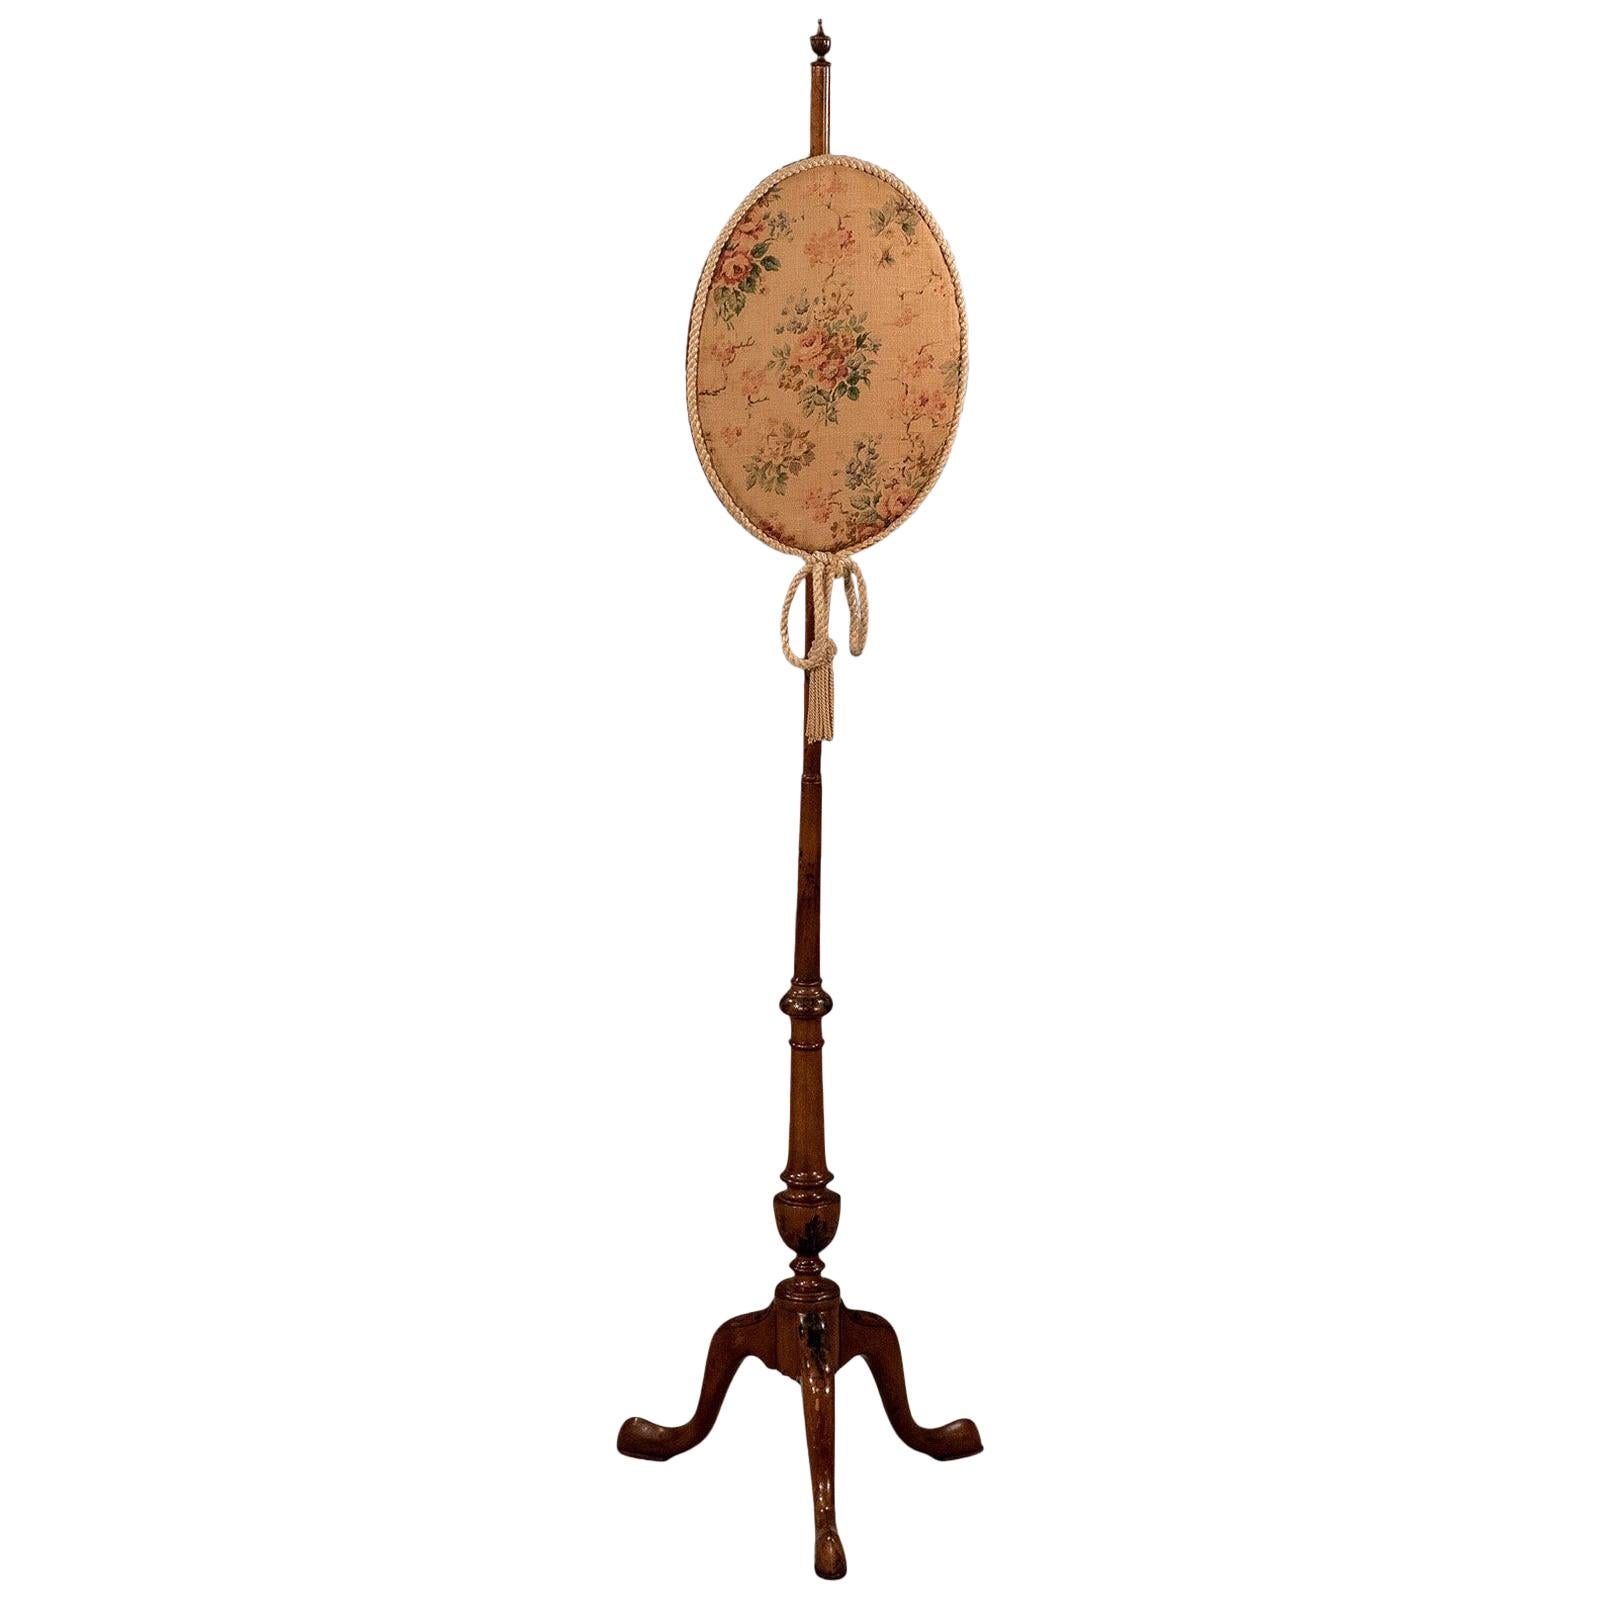 Antiker Standschirm, englisch, viktorianisch, Mahagoni, Gobelinstickerei, Wandteppich